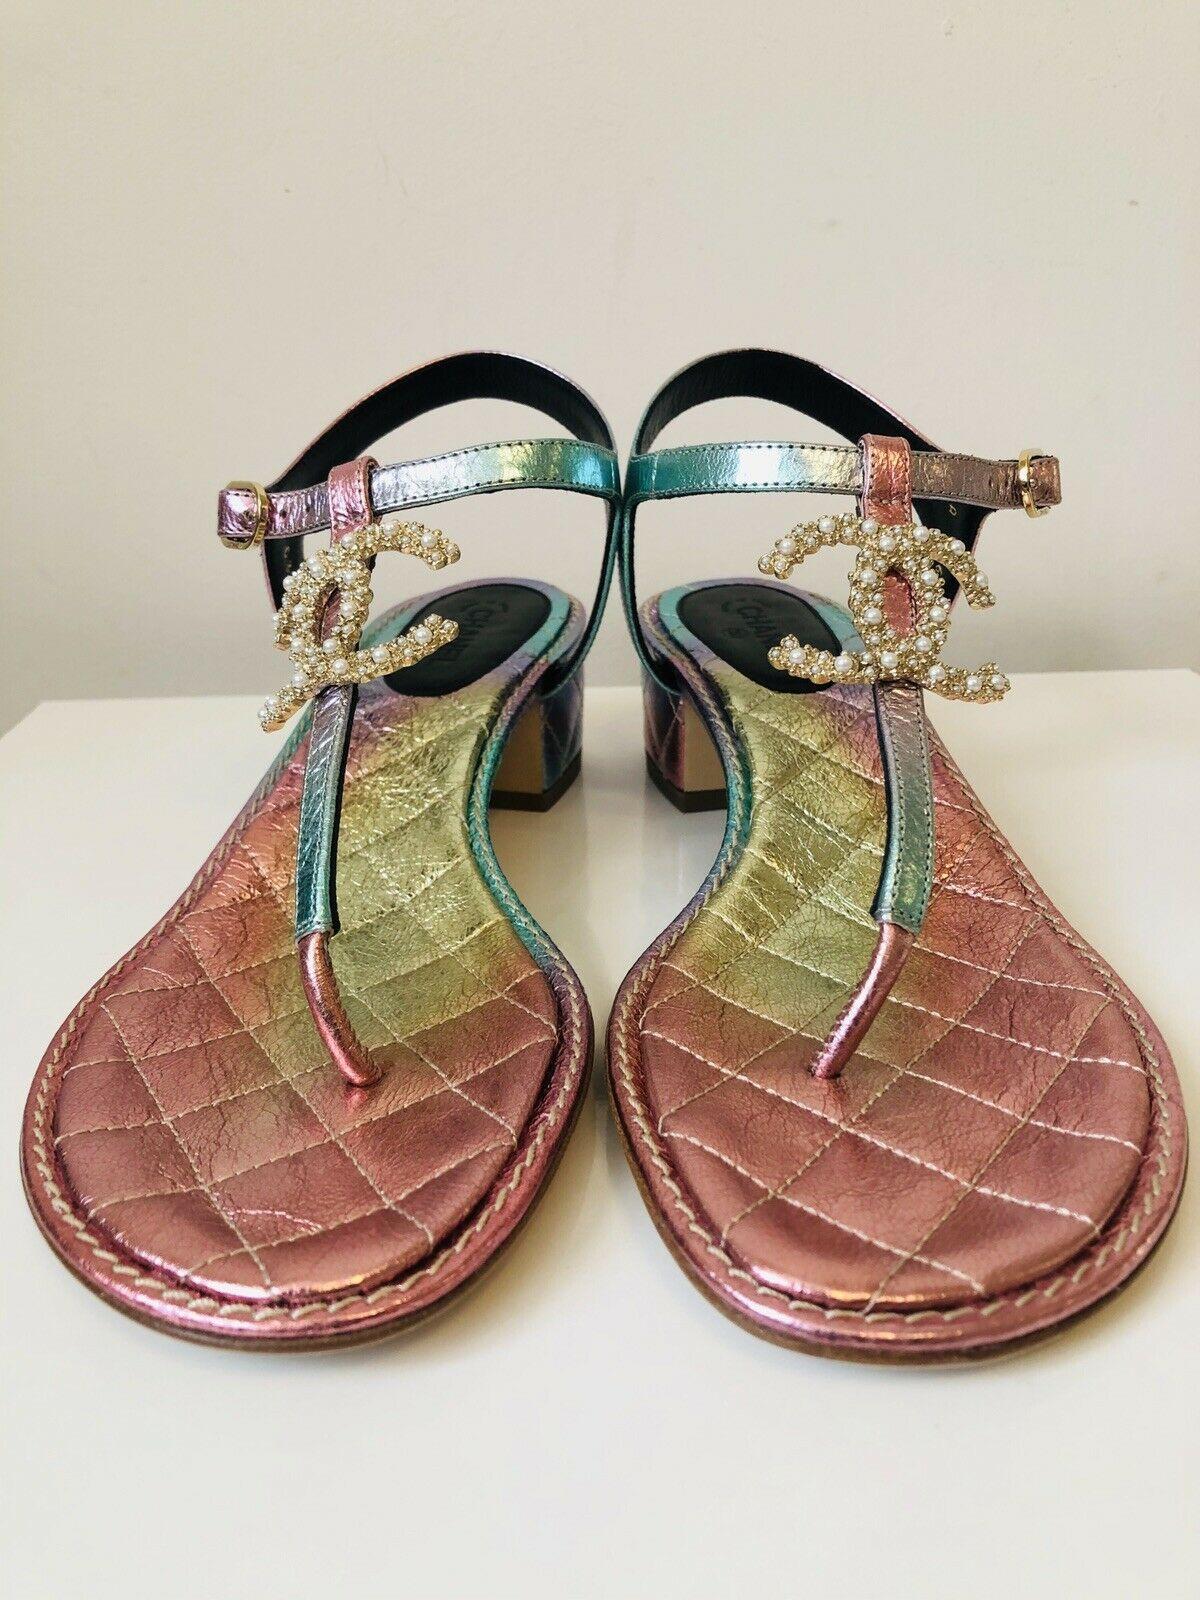 chanel rainbow sandals